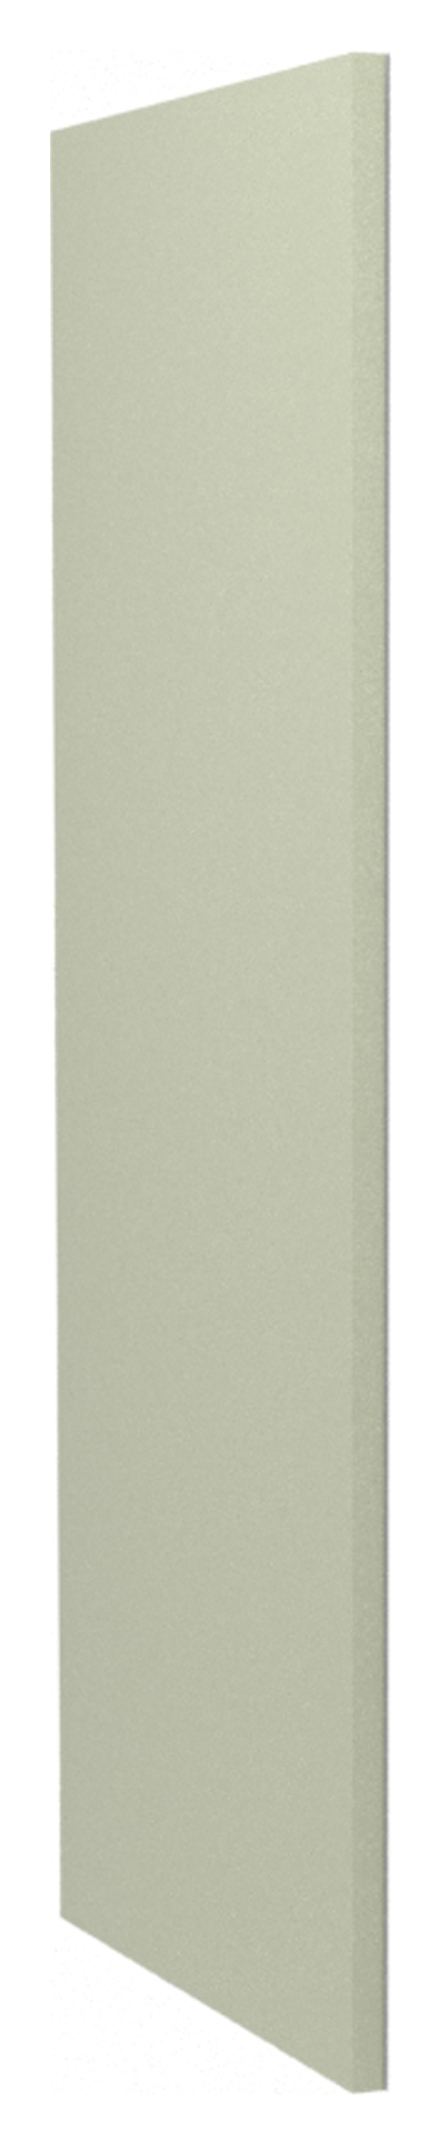 Wickes Ohio Sage Shaker Decor Wall Panel - 18mm